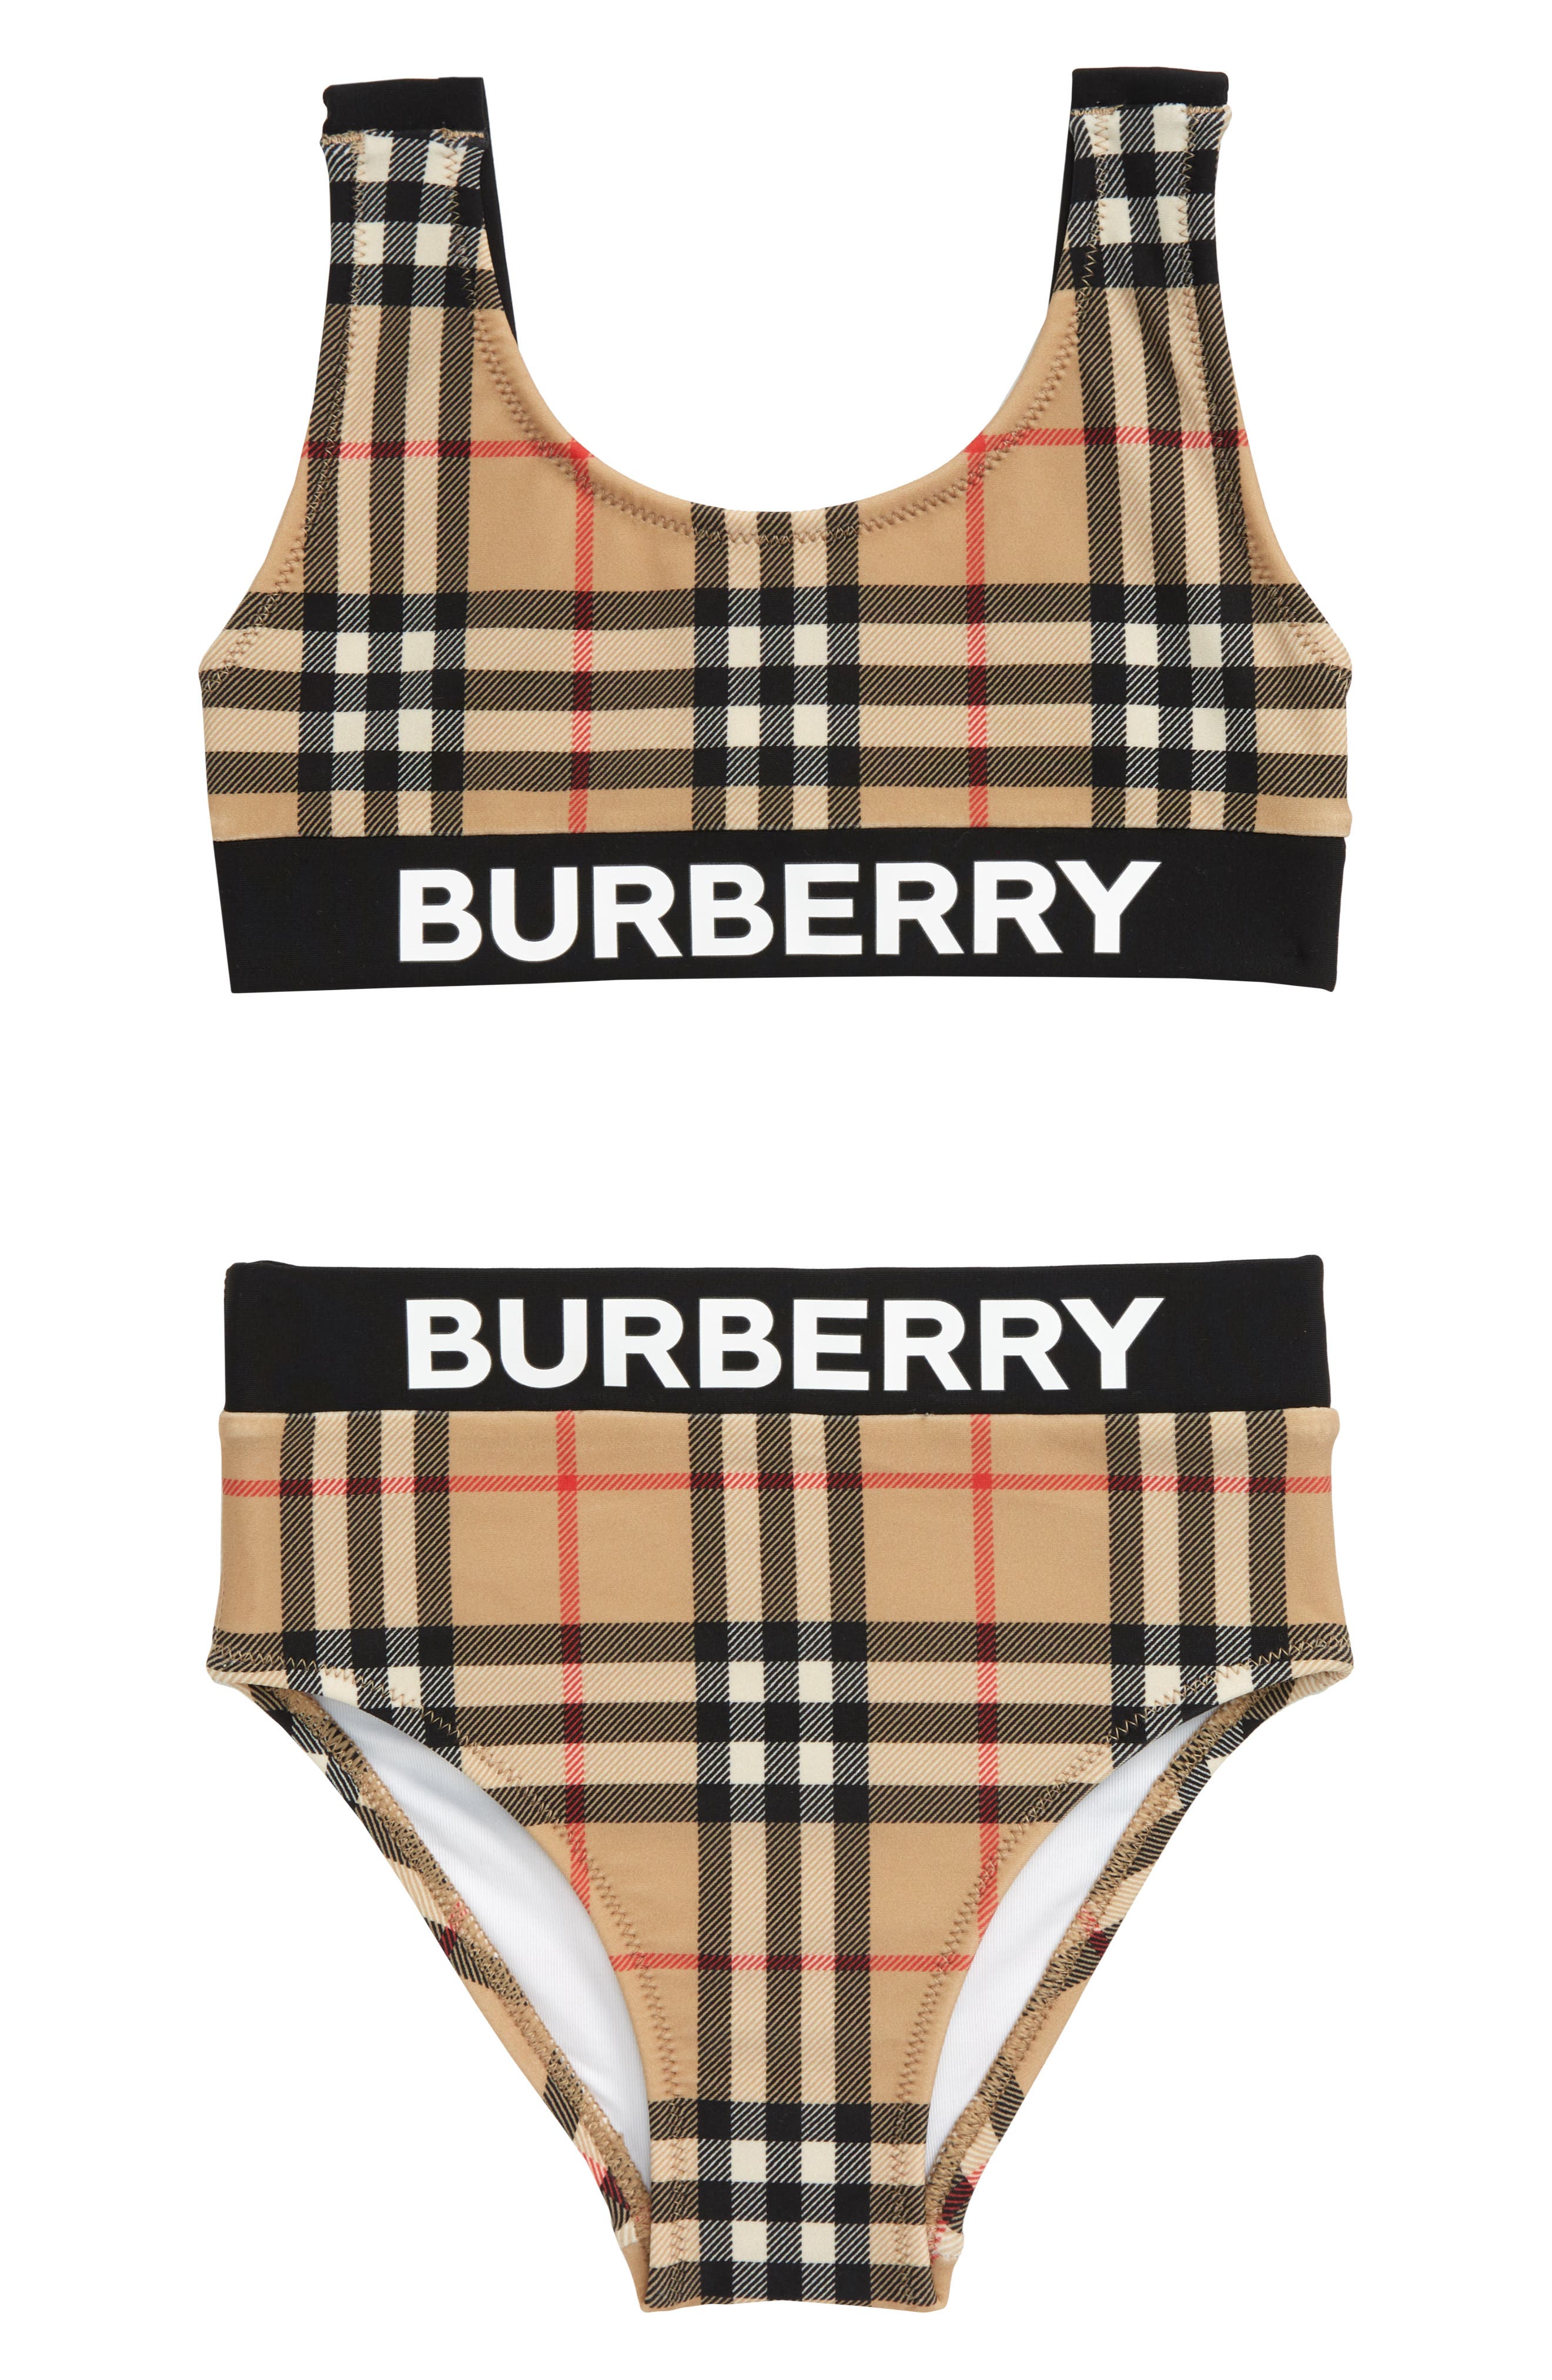 burberry inspired swimsuit